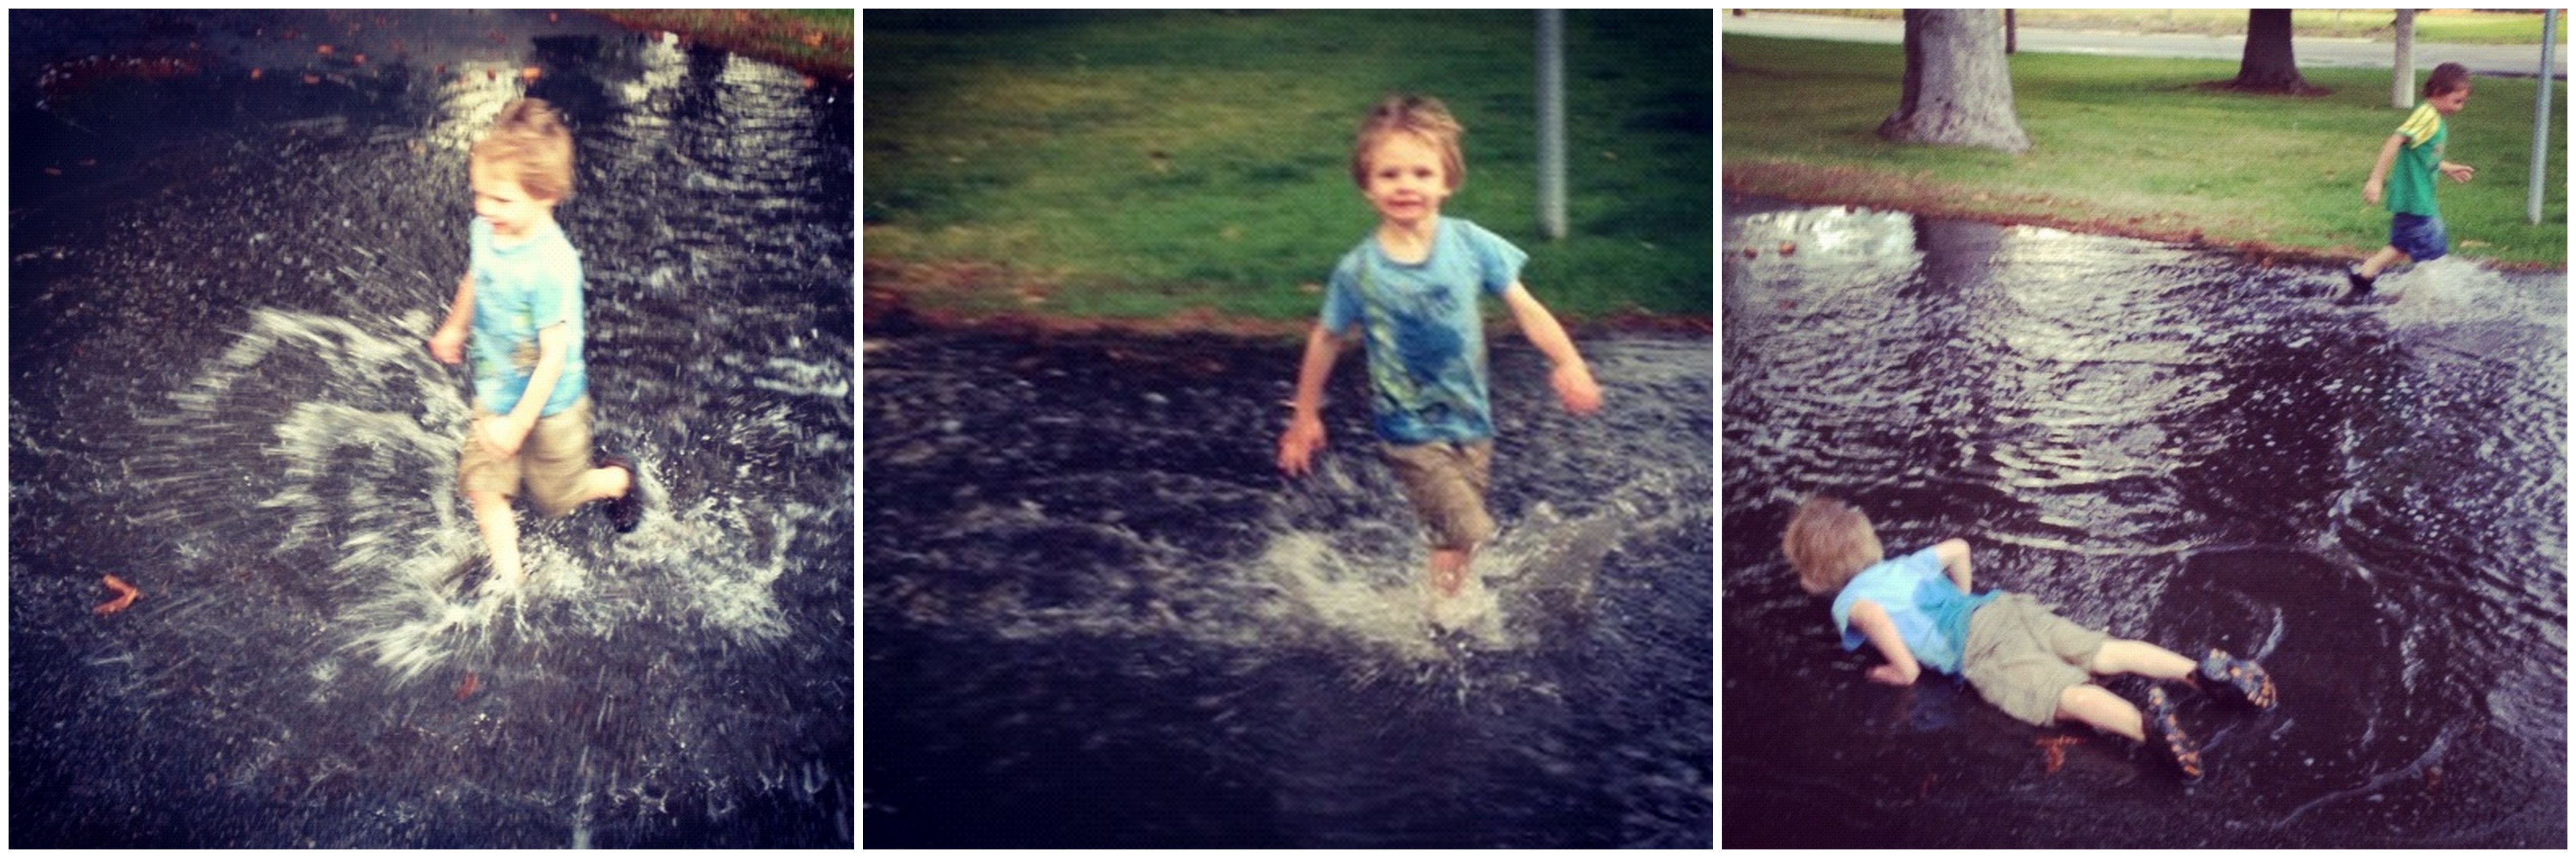 little boy running through puddle instagram